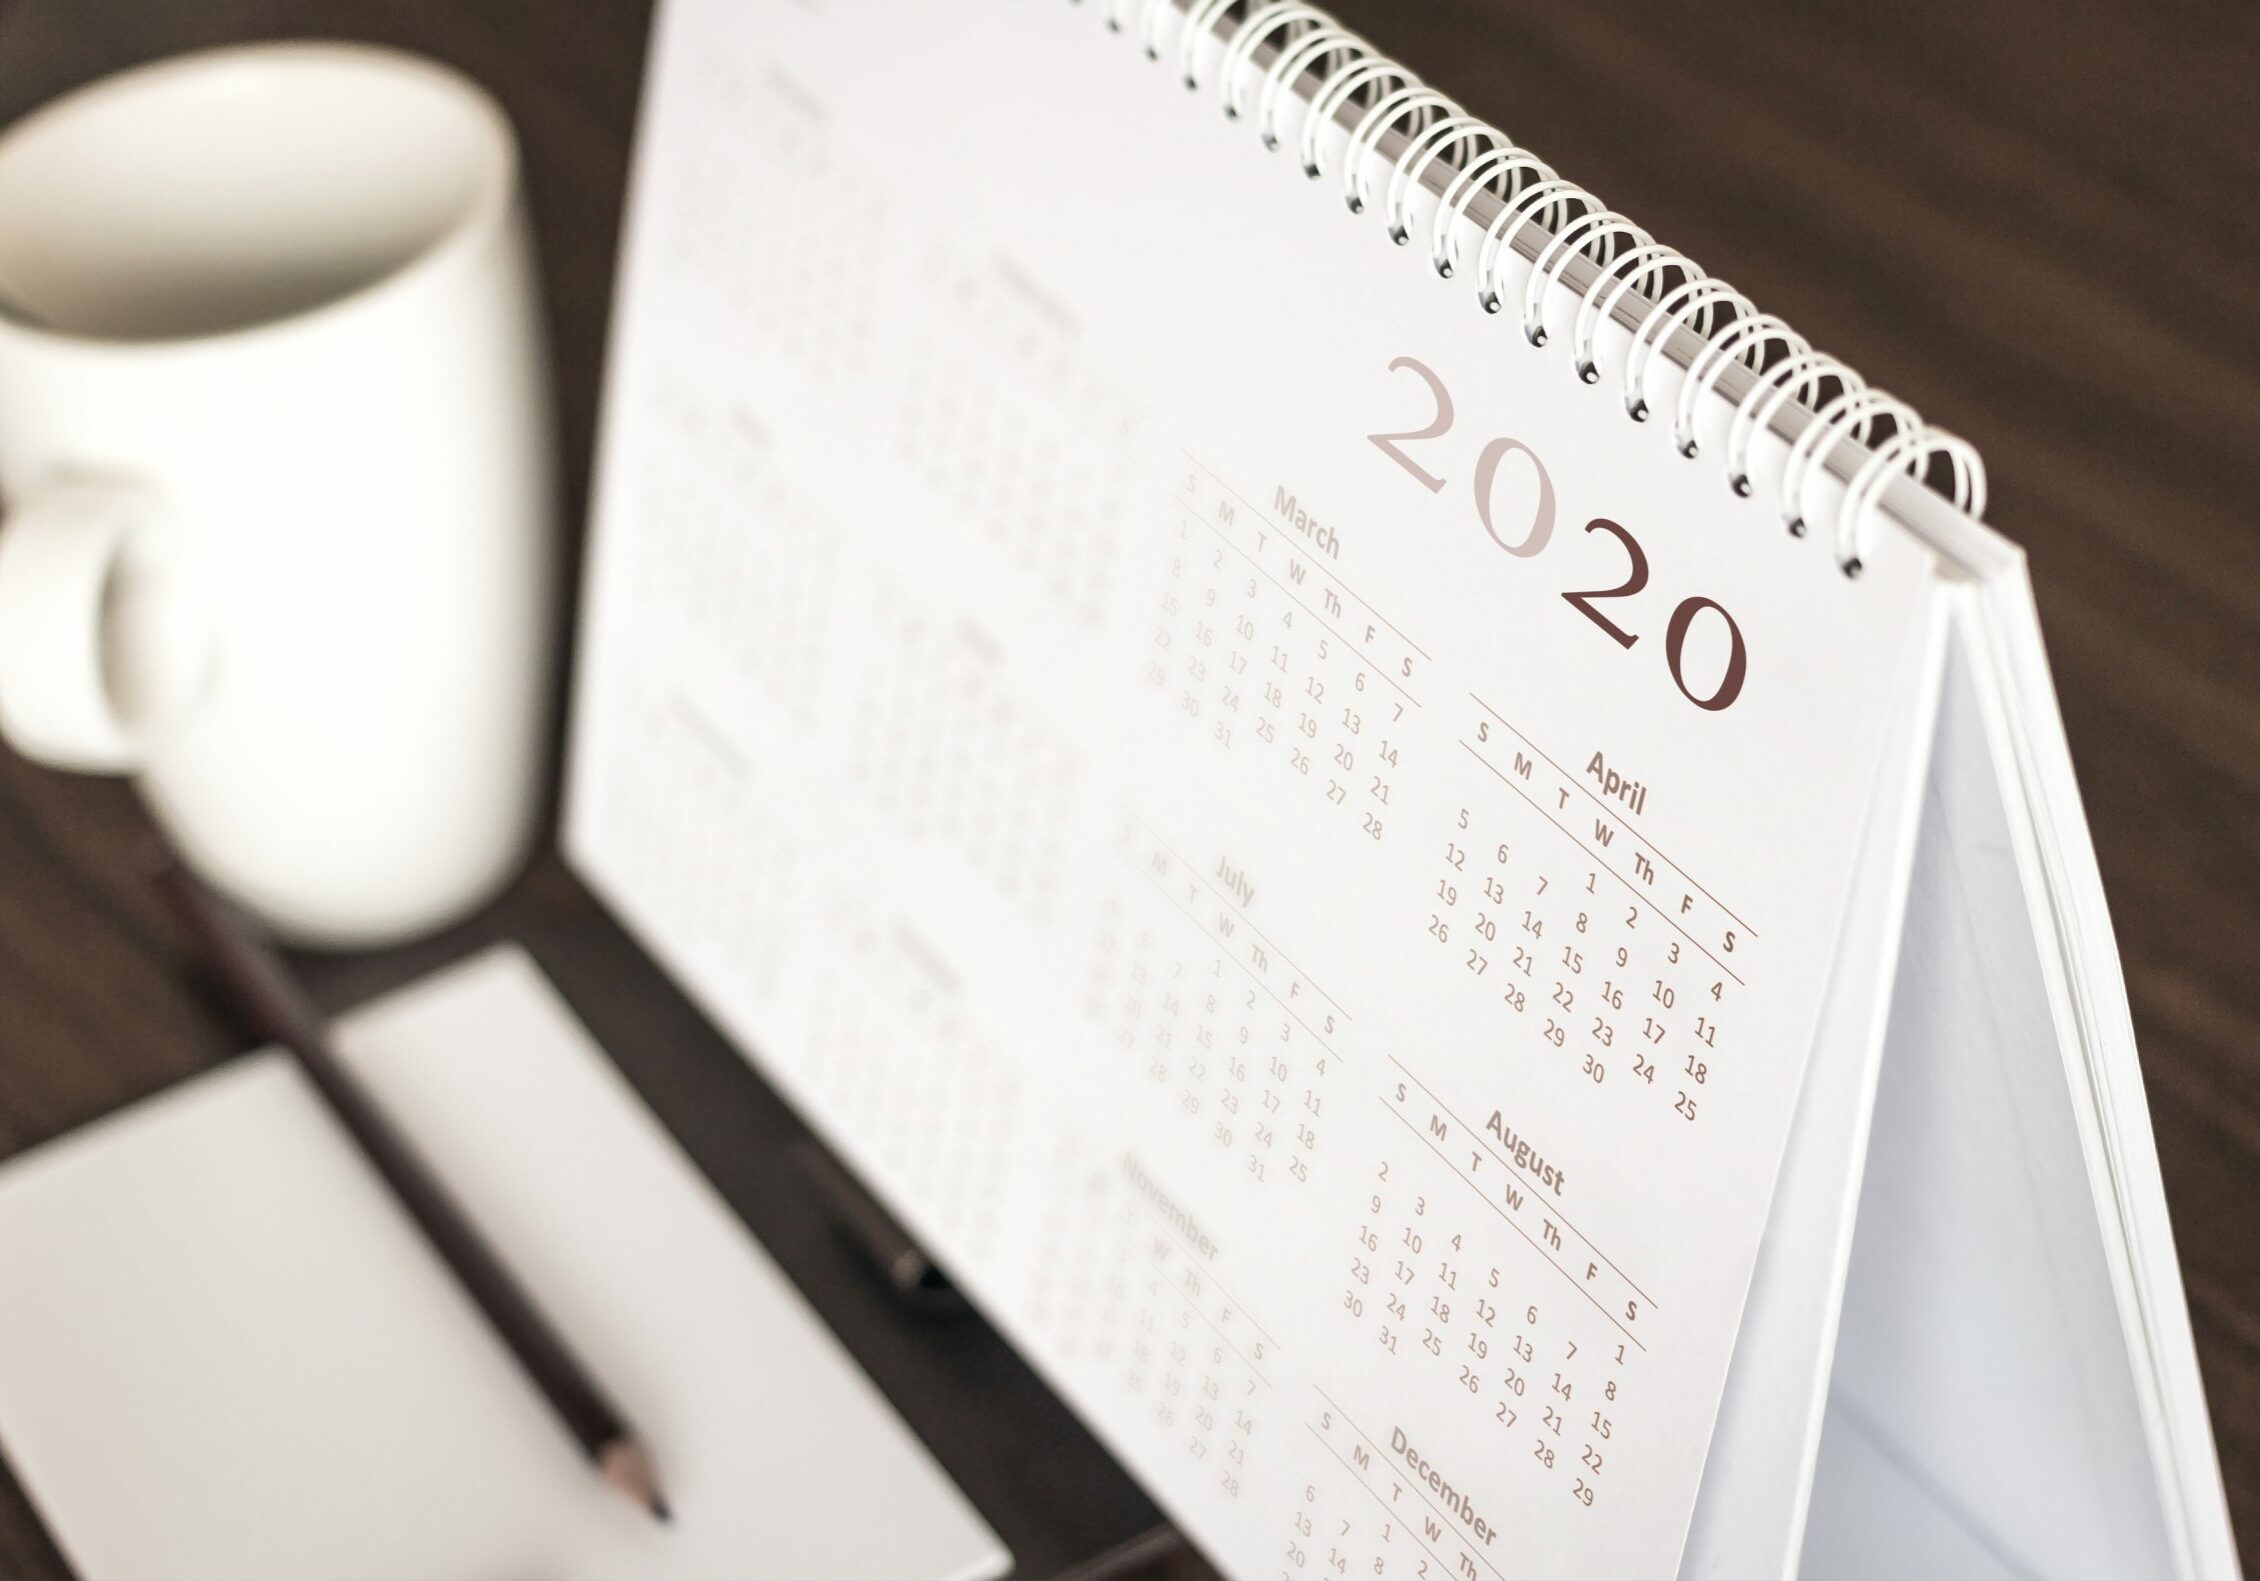 Desktop calendar sitting on desk showing year of 2019